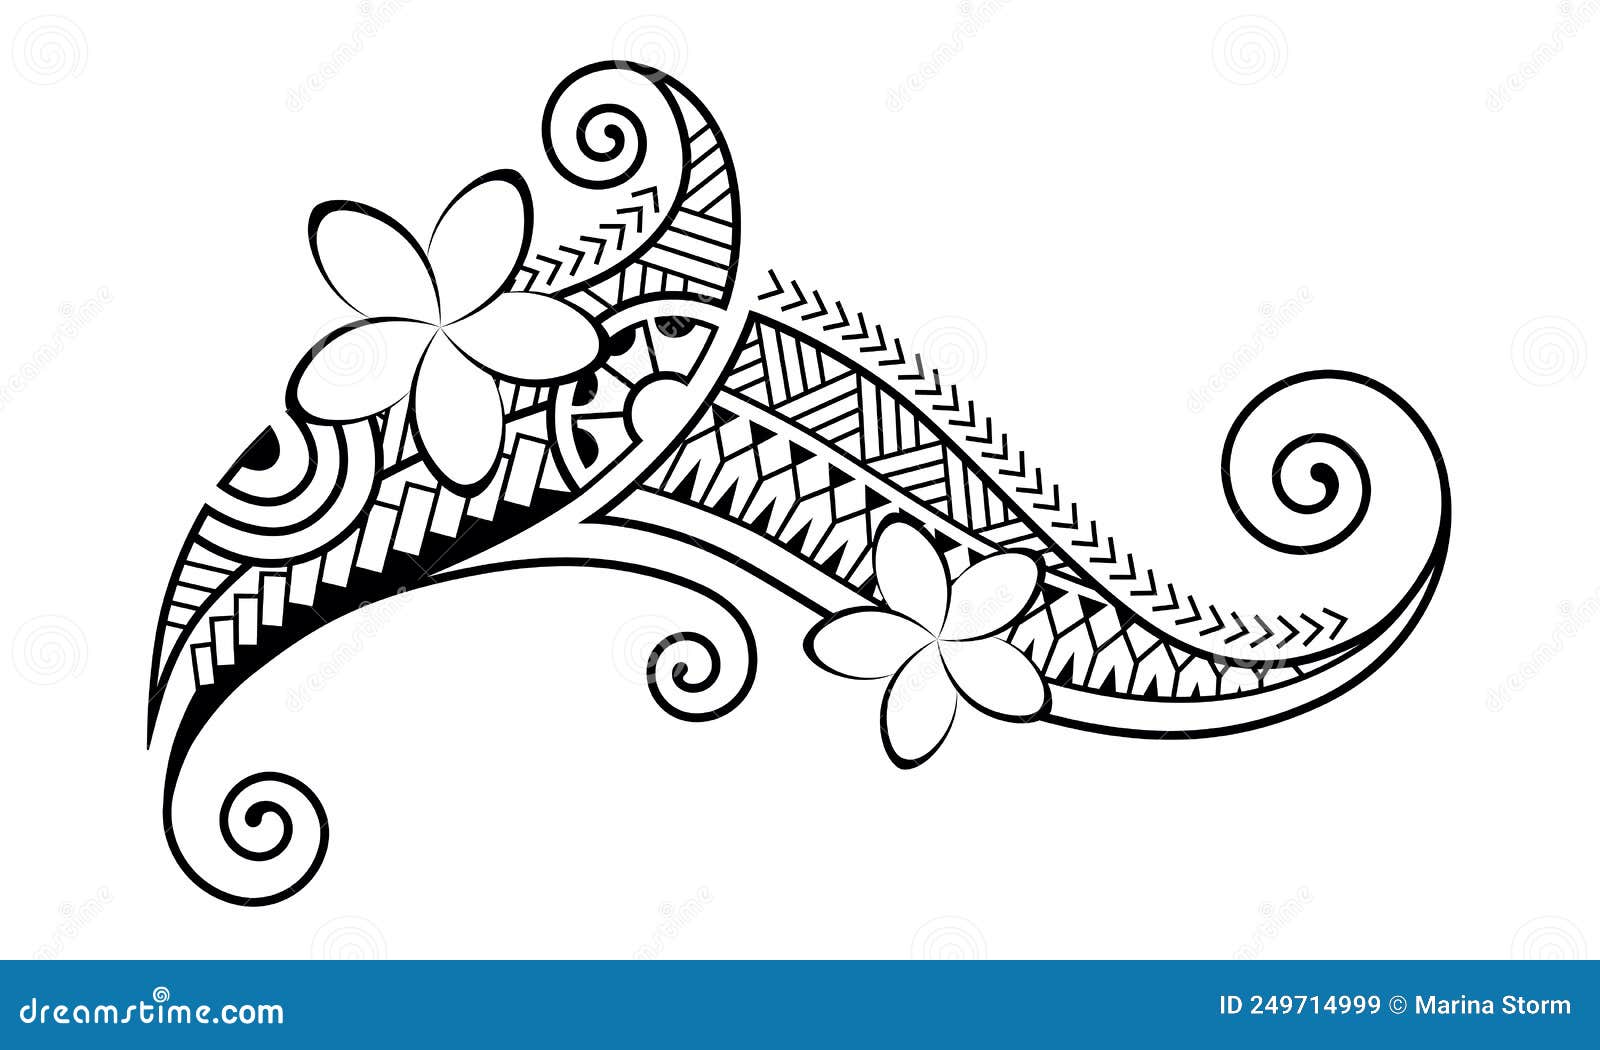 Tattoo maori design ethnic decorative oriental Vector Image